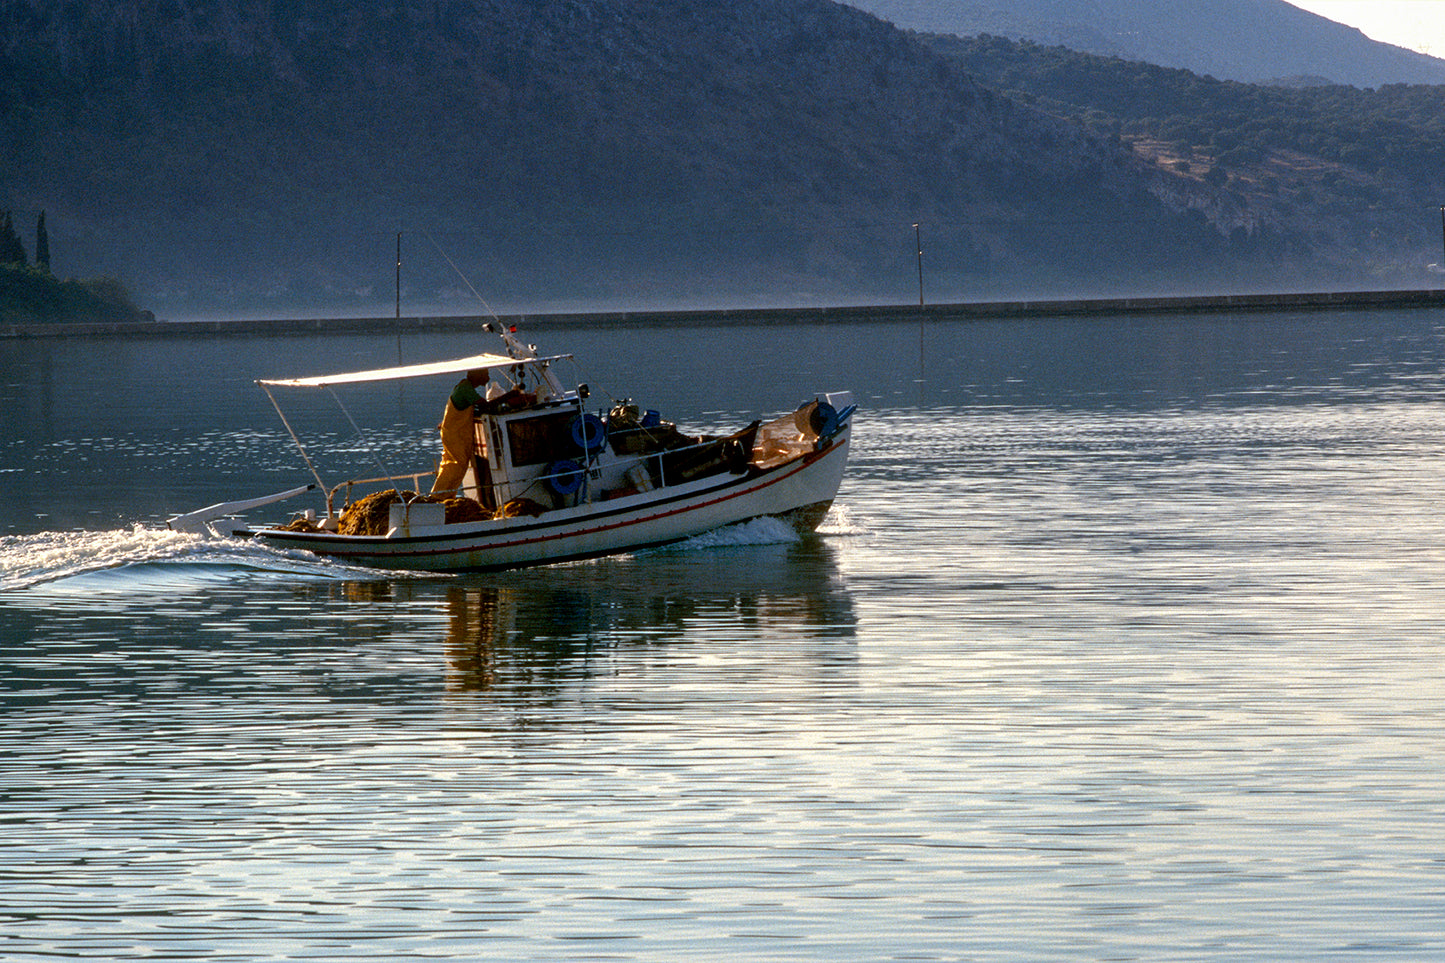 The fishing boat leaving Katapola